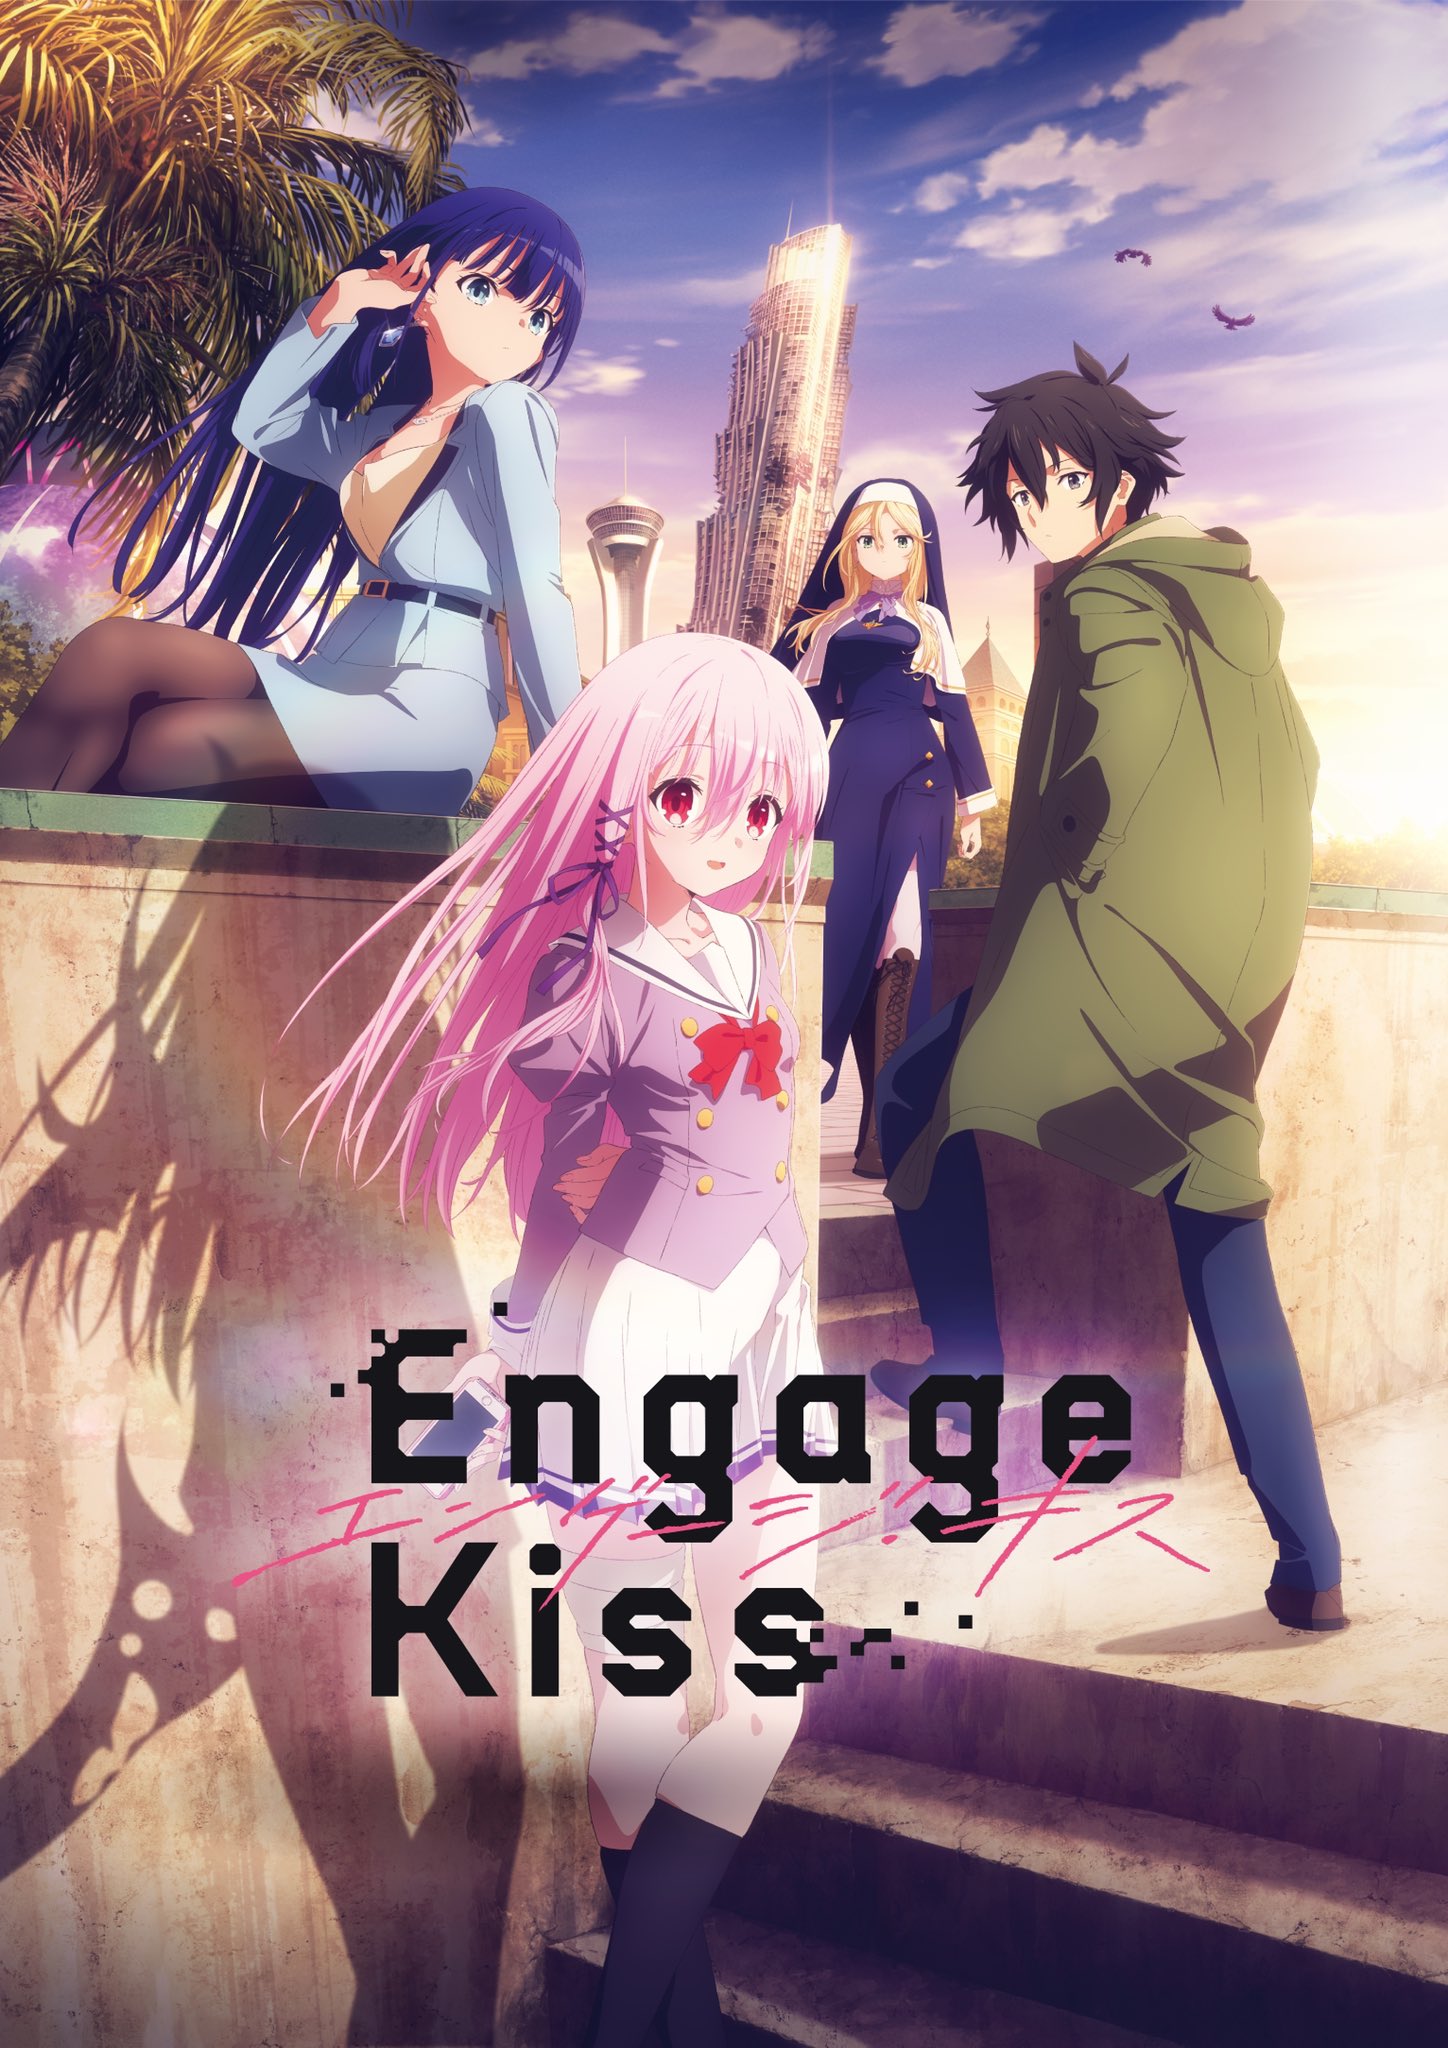 manhwa #recommendation | Anime couple kiss, Anime, Anime kiss